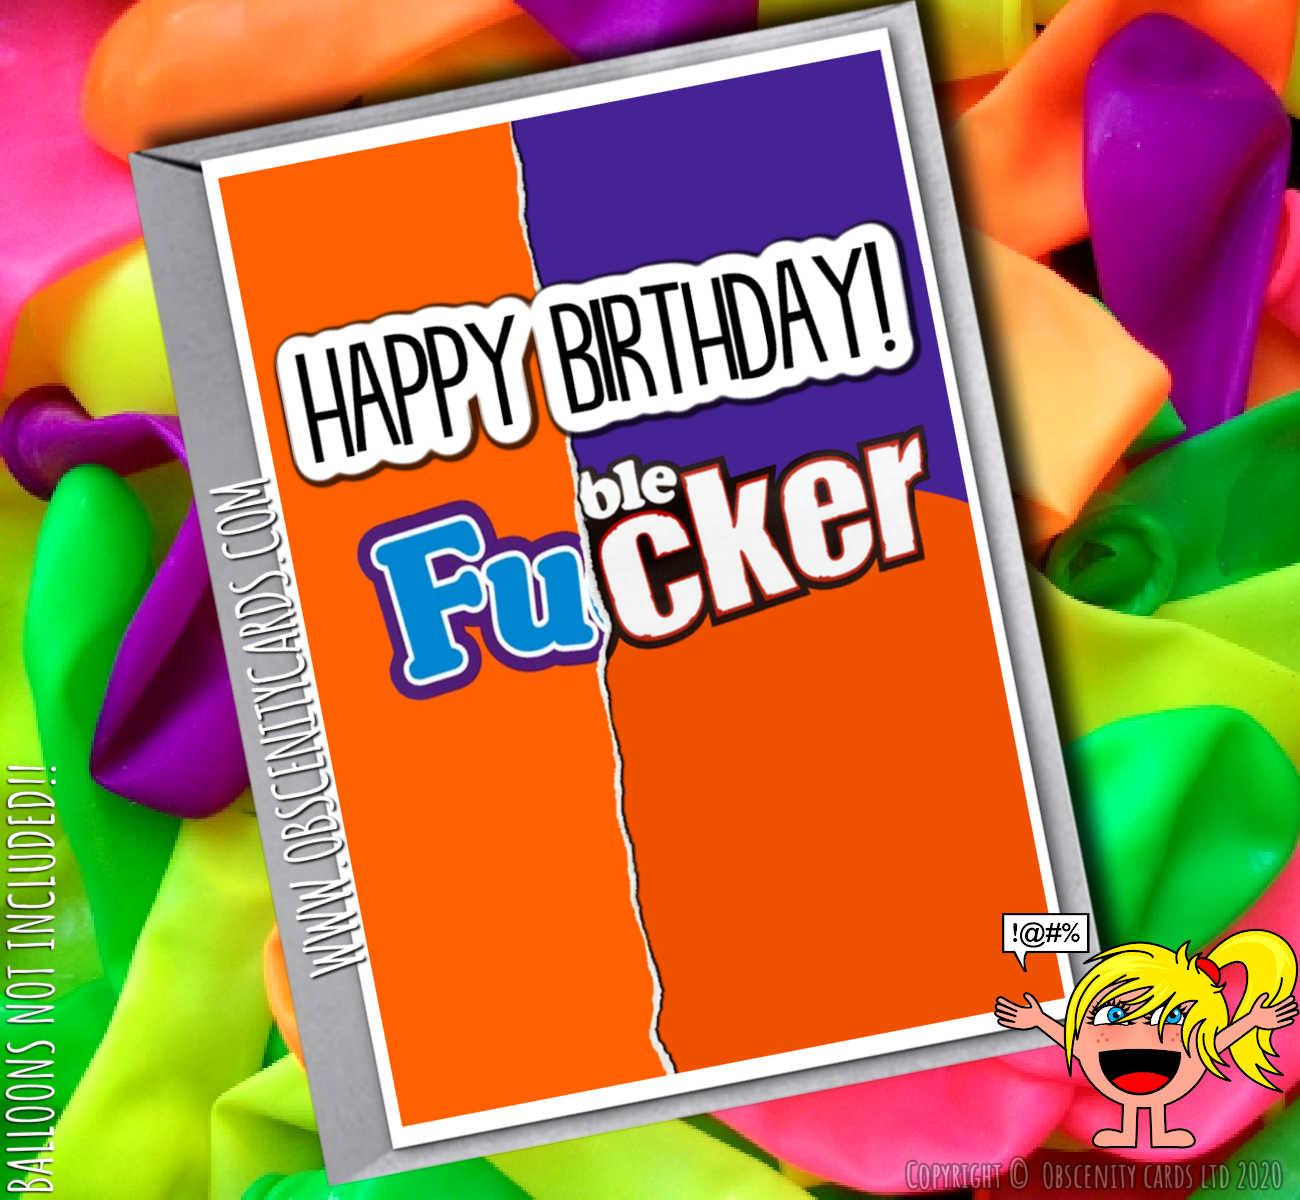 HAPPY BIRTHDAY FUCKER CHOCOLATE WRAPPER FUNNY BIRTHDAY CARD